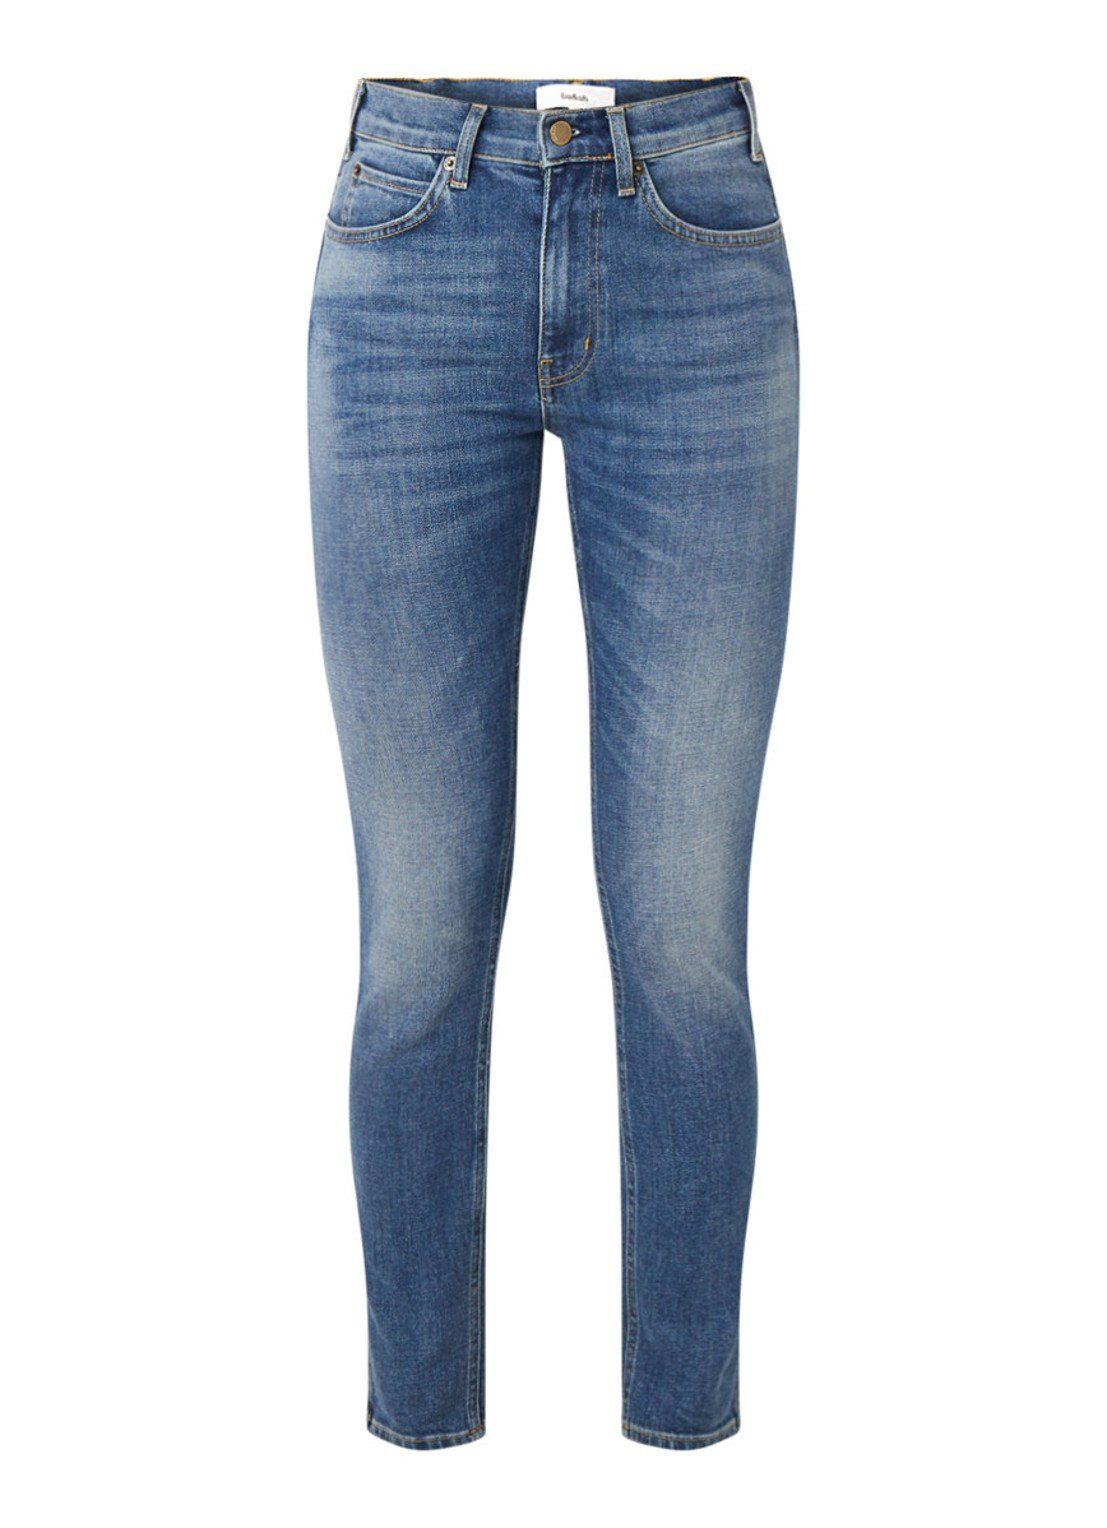 Z1975 Denim Skinny jeans wit gestreept patroon casual uitstraling Mode Spijkerbroeken Skinny jeans 